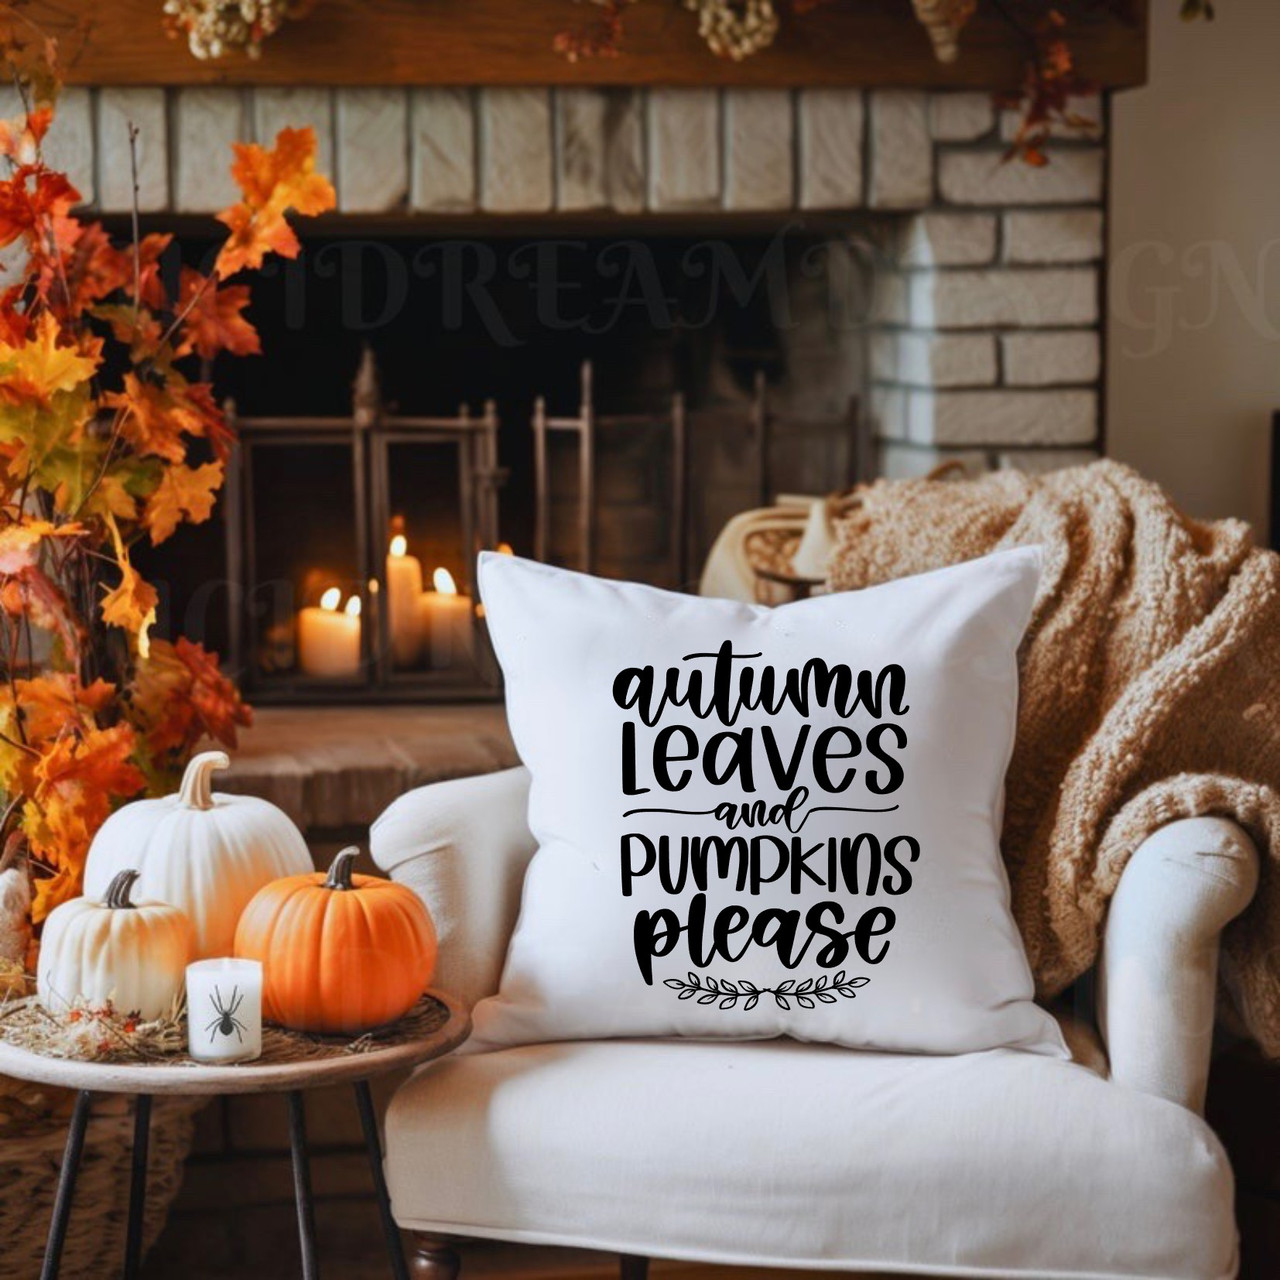 Autumn Leaves Pattern Pillows